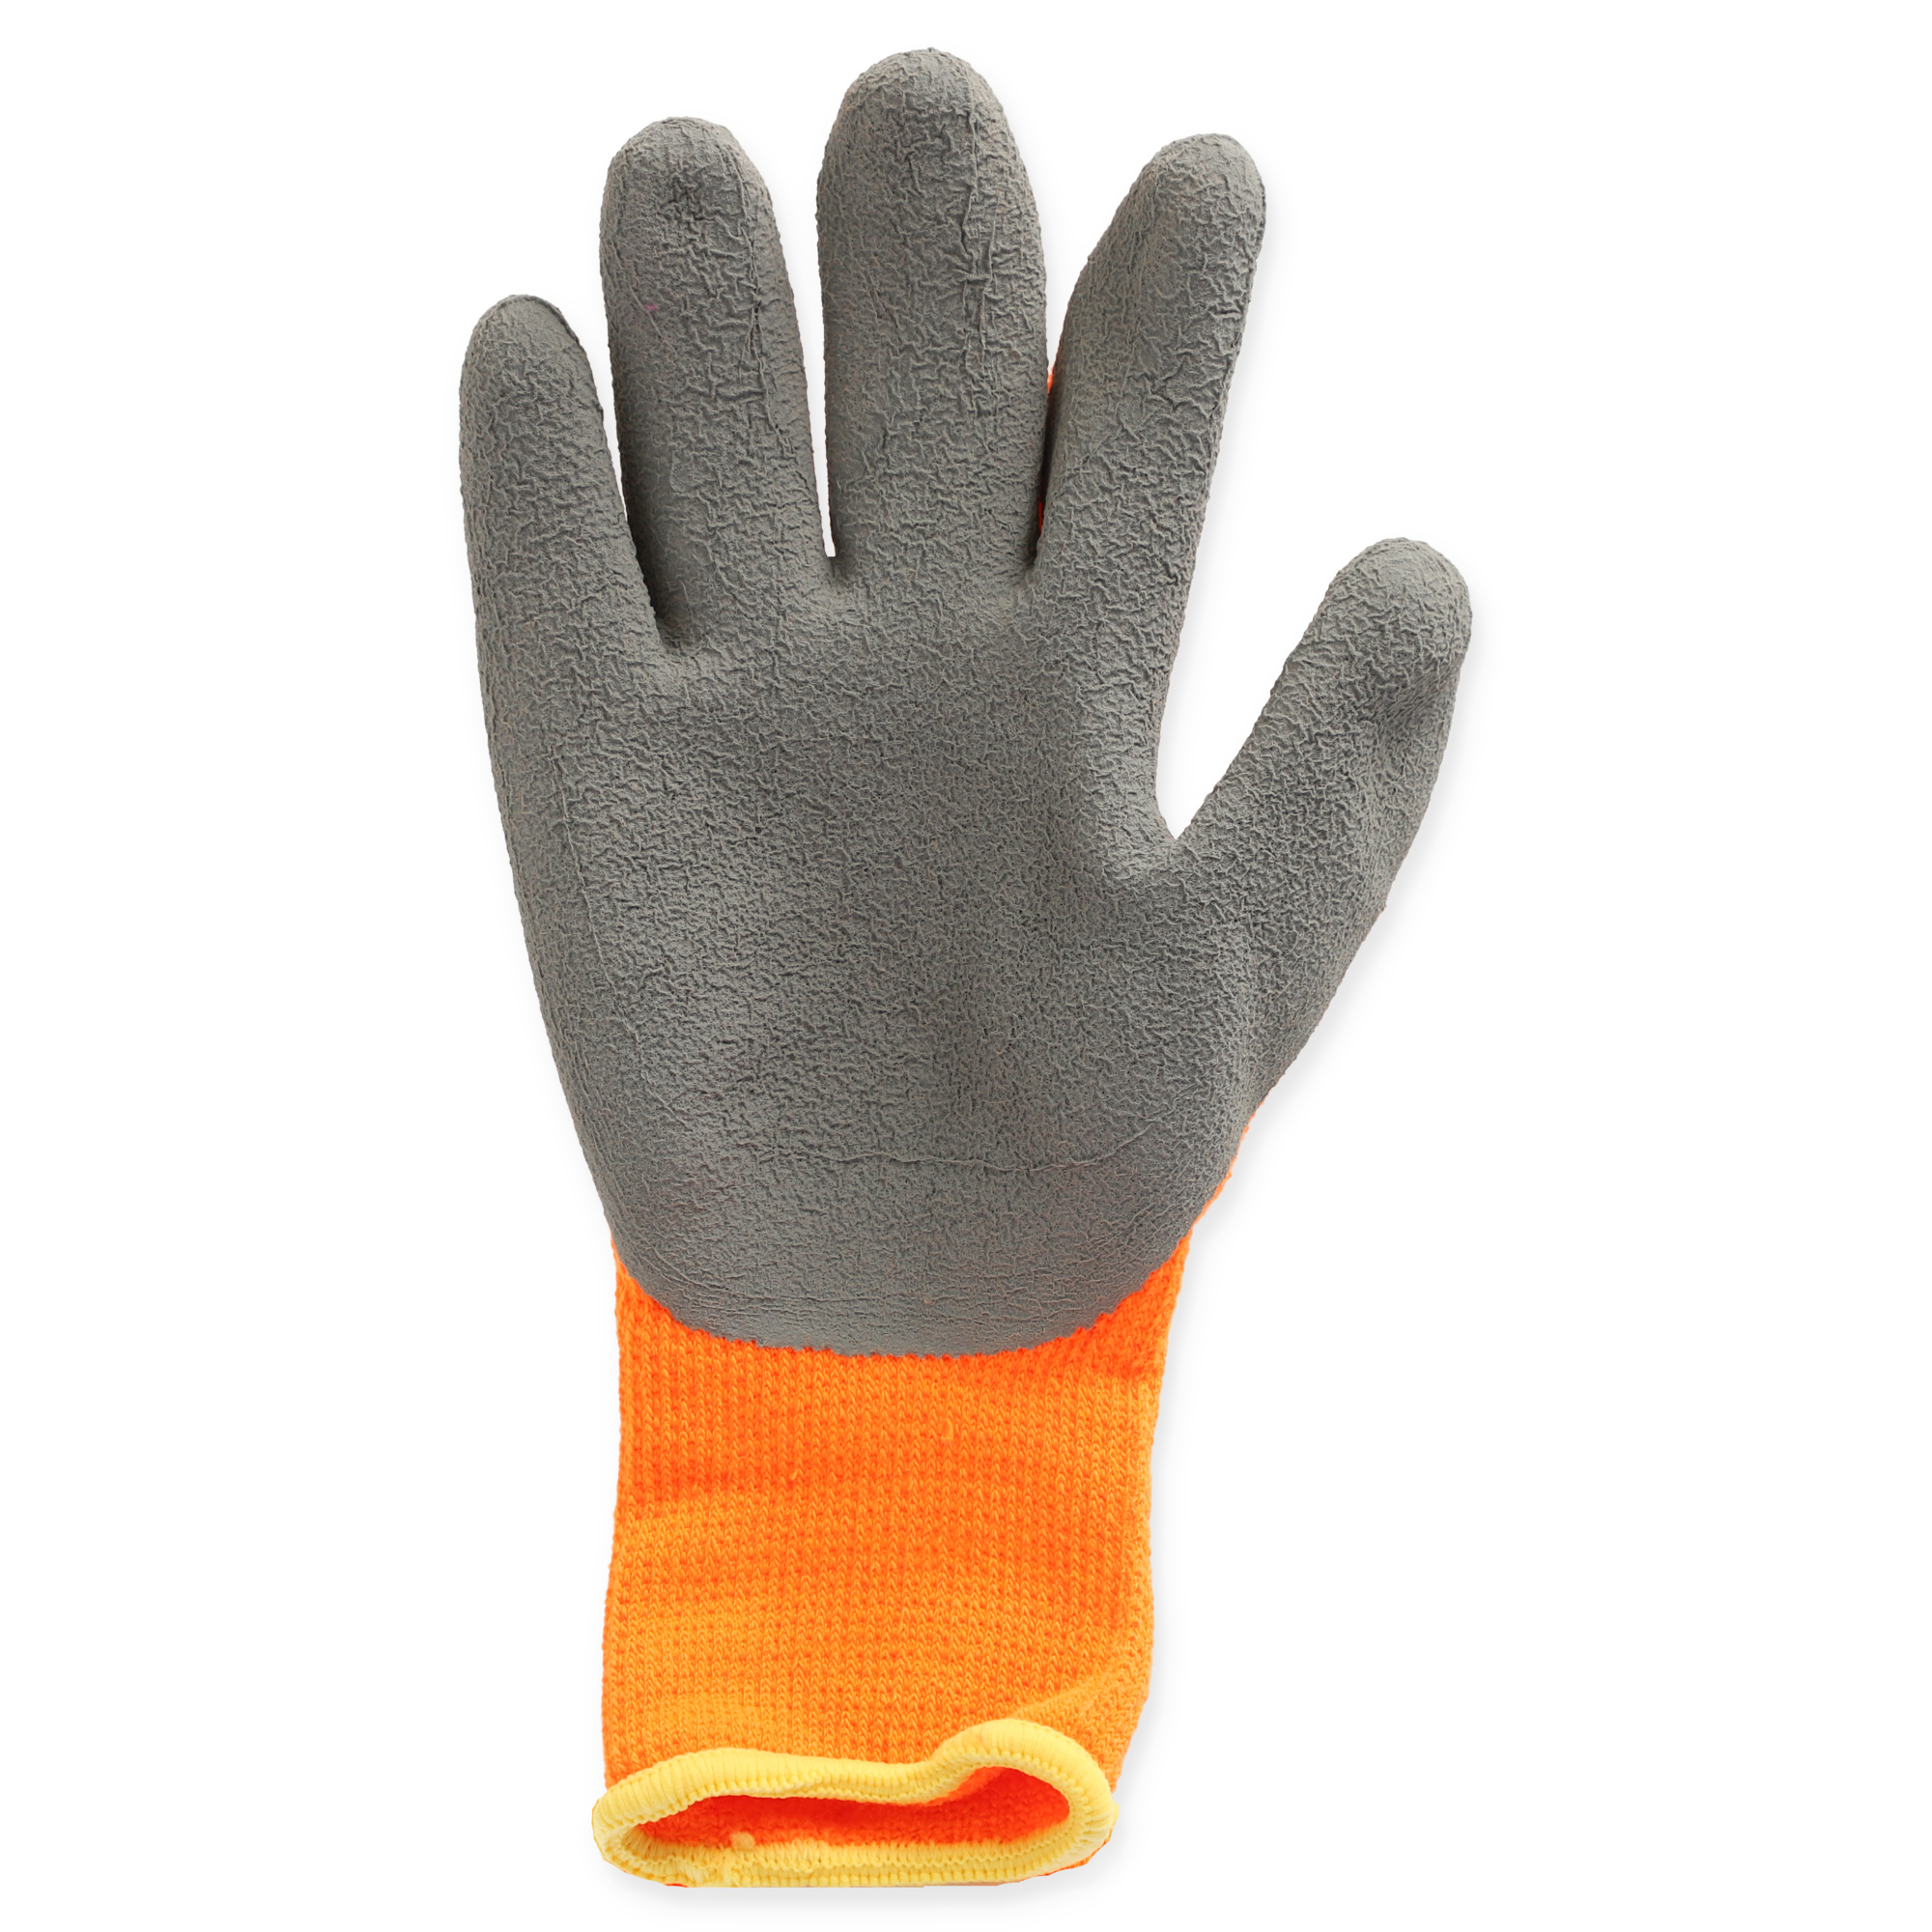 Handschuhe 'Basic 3005' orange Gr. 9 + product picture